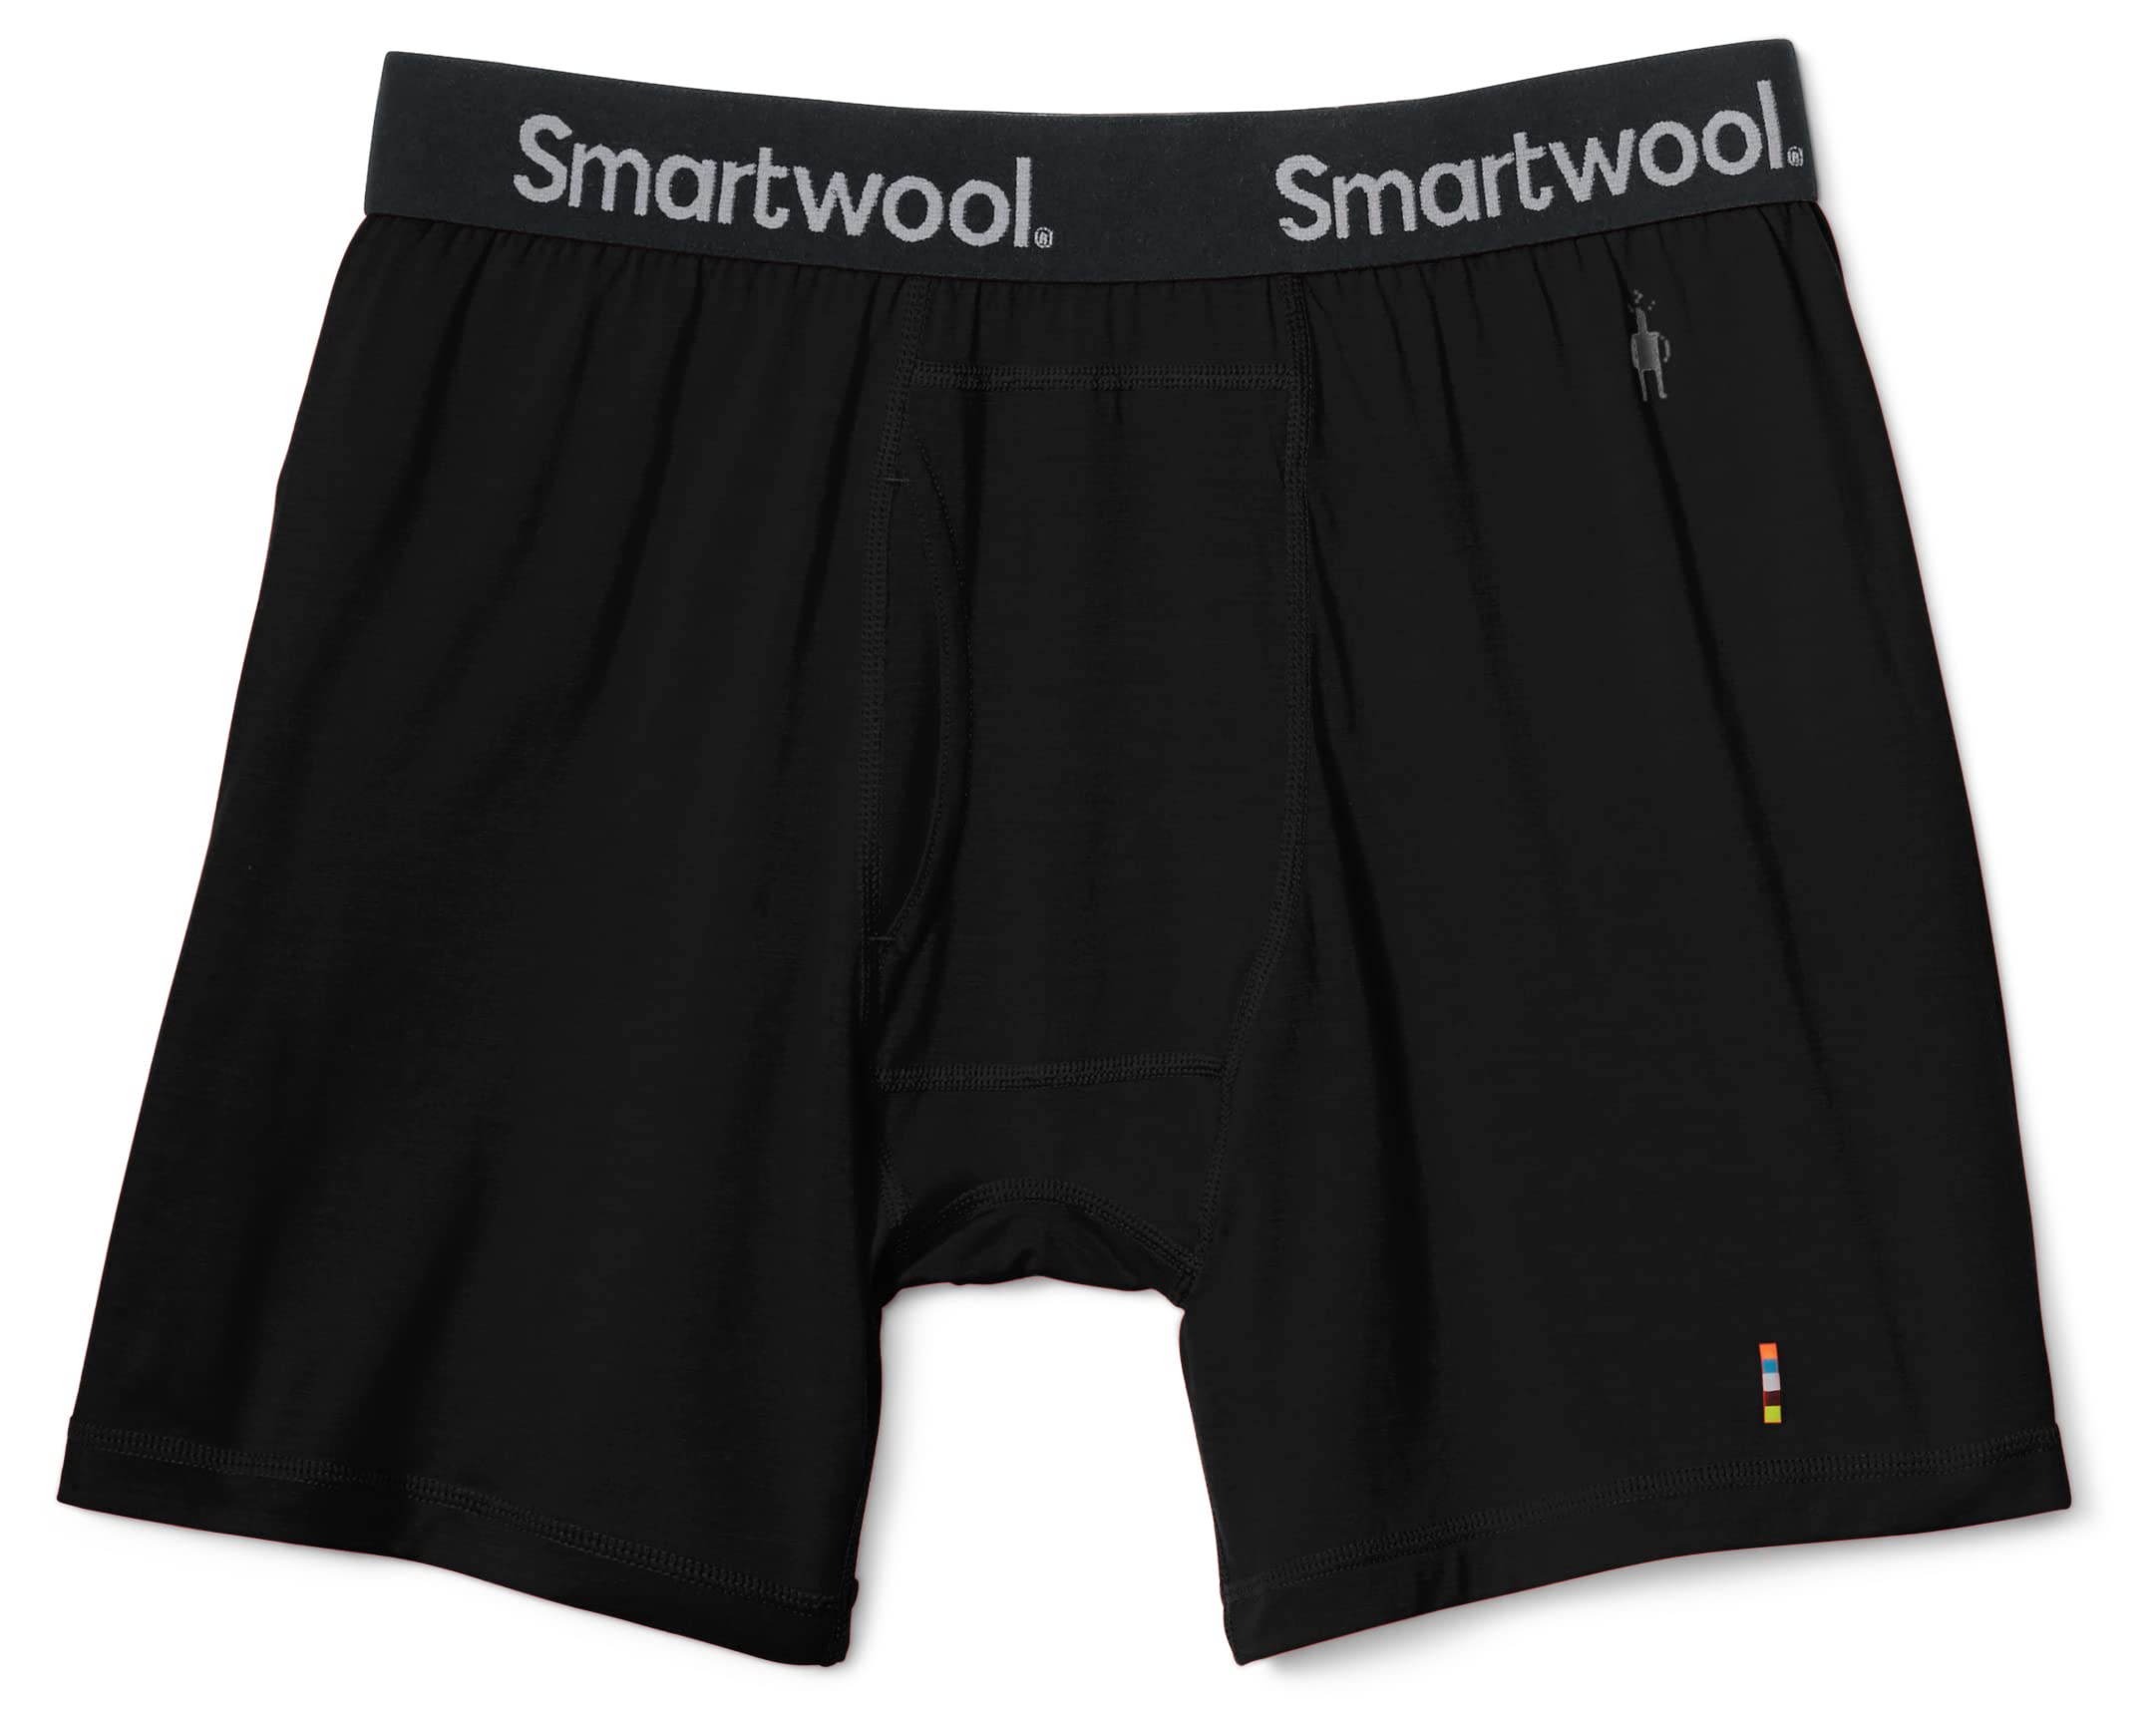 Smartwool Men's Merino Boxer Brief, Black, XL